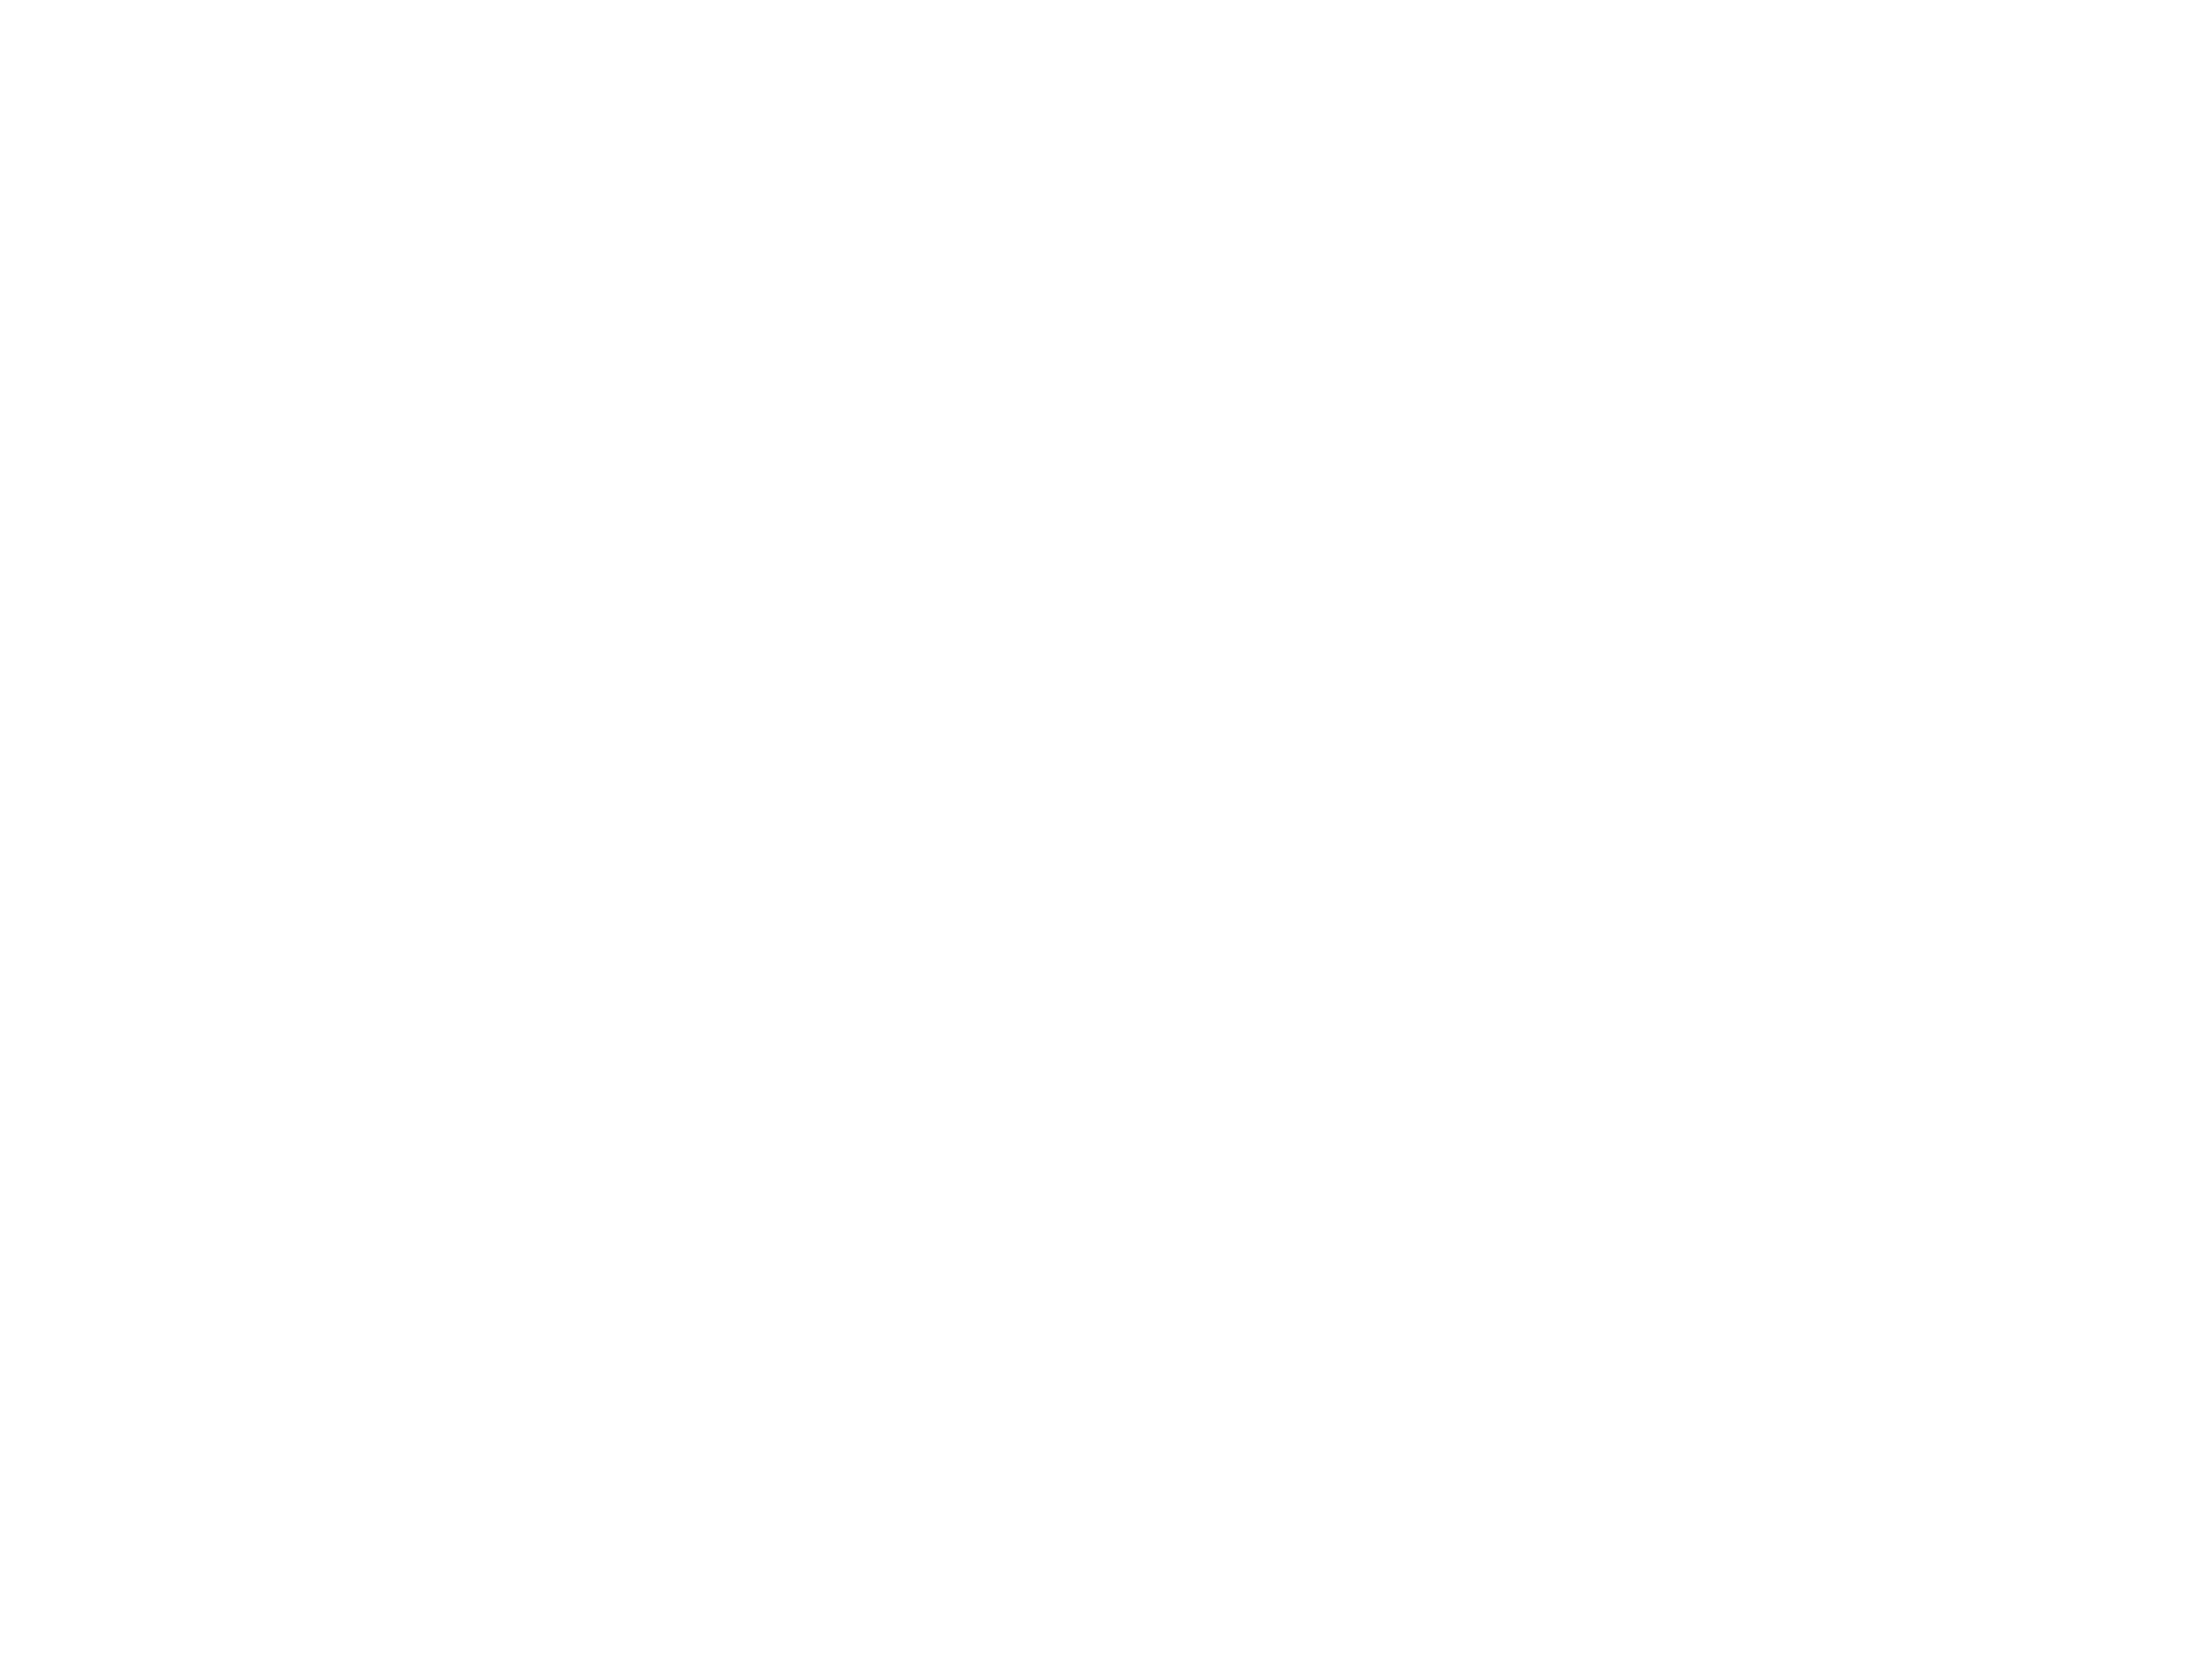 Eateaket_logo copy.png